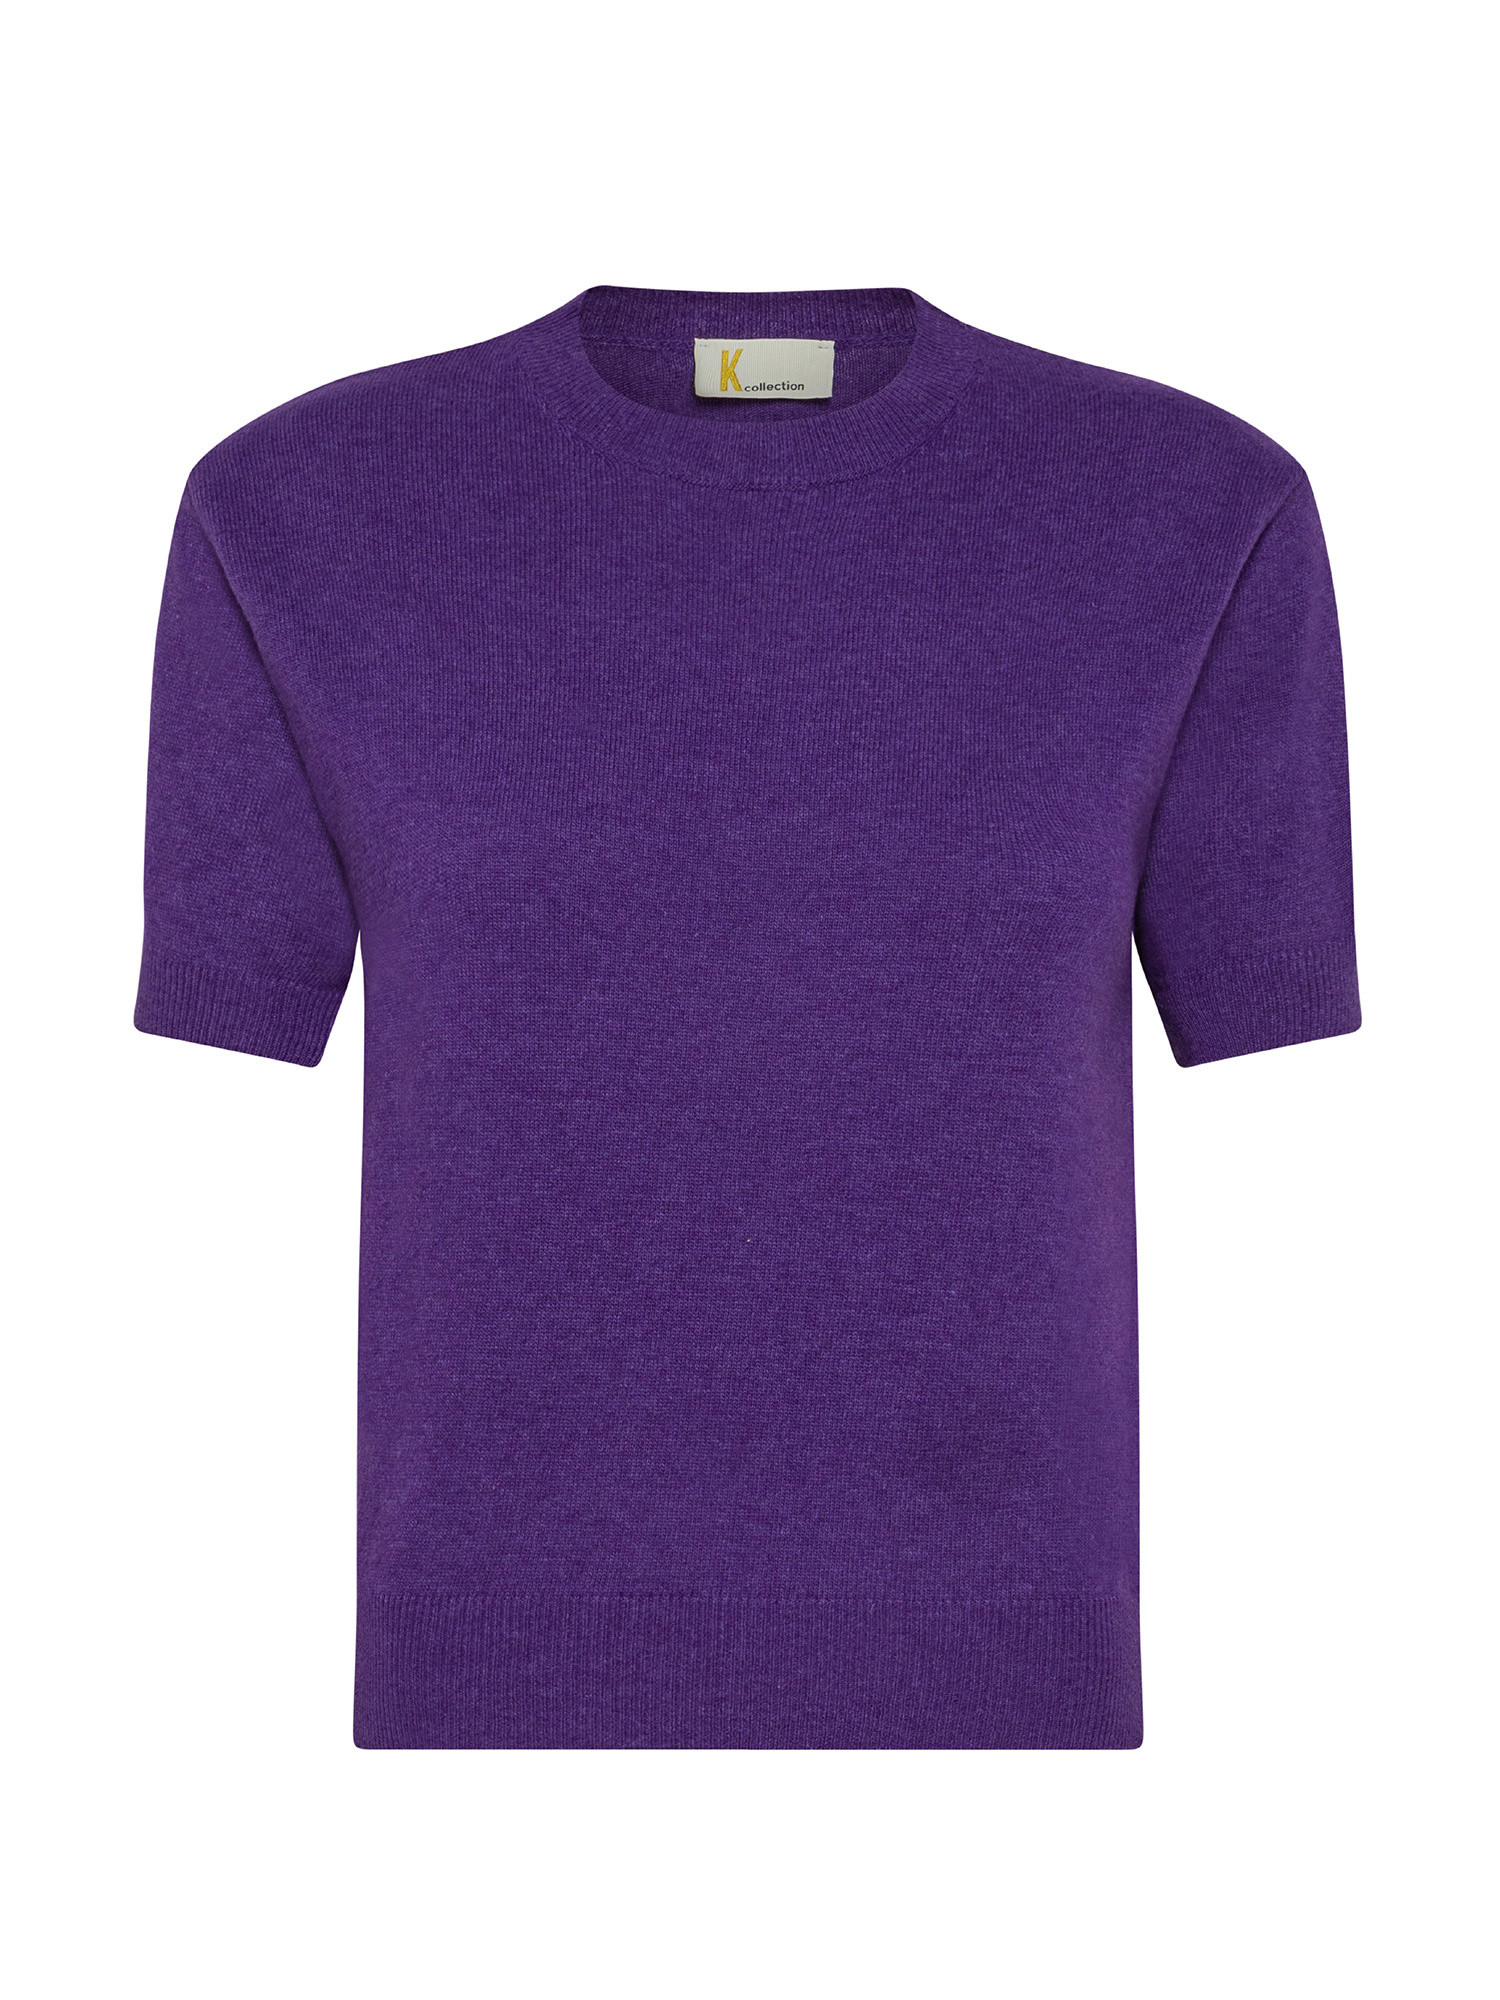 K Collection - Crewneck sweater, Purple, large image number 0